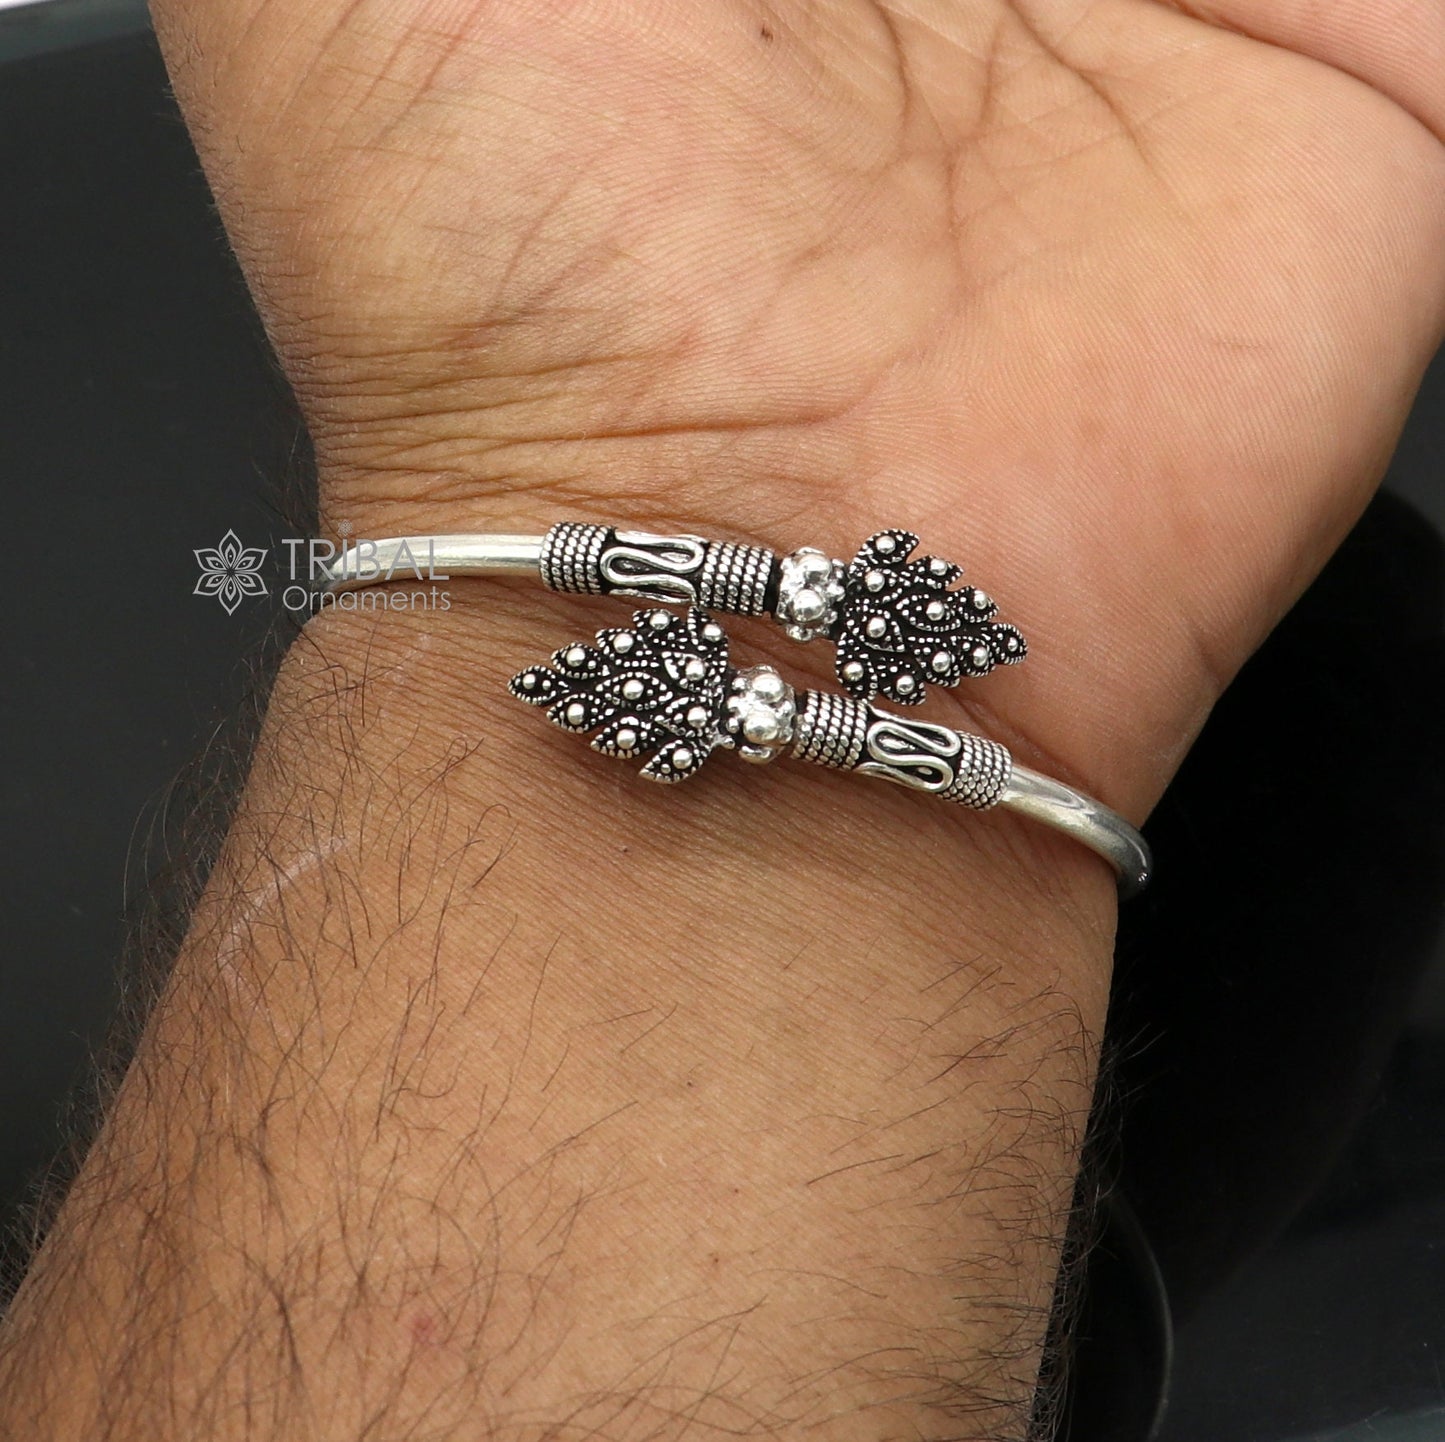 Peacock feather design 925 sterling silver cuff bracelet kada for girl's women's silver jewelry cuff238